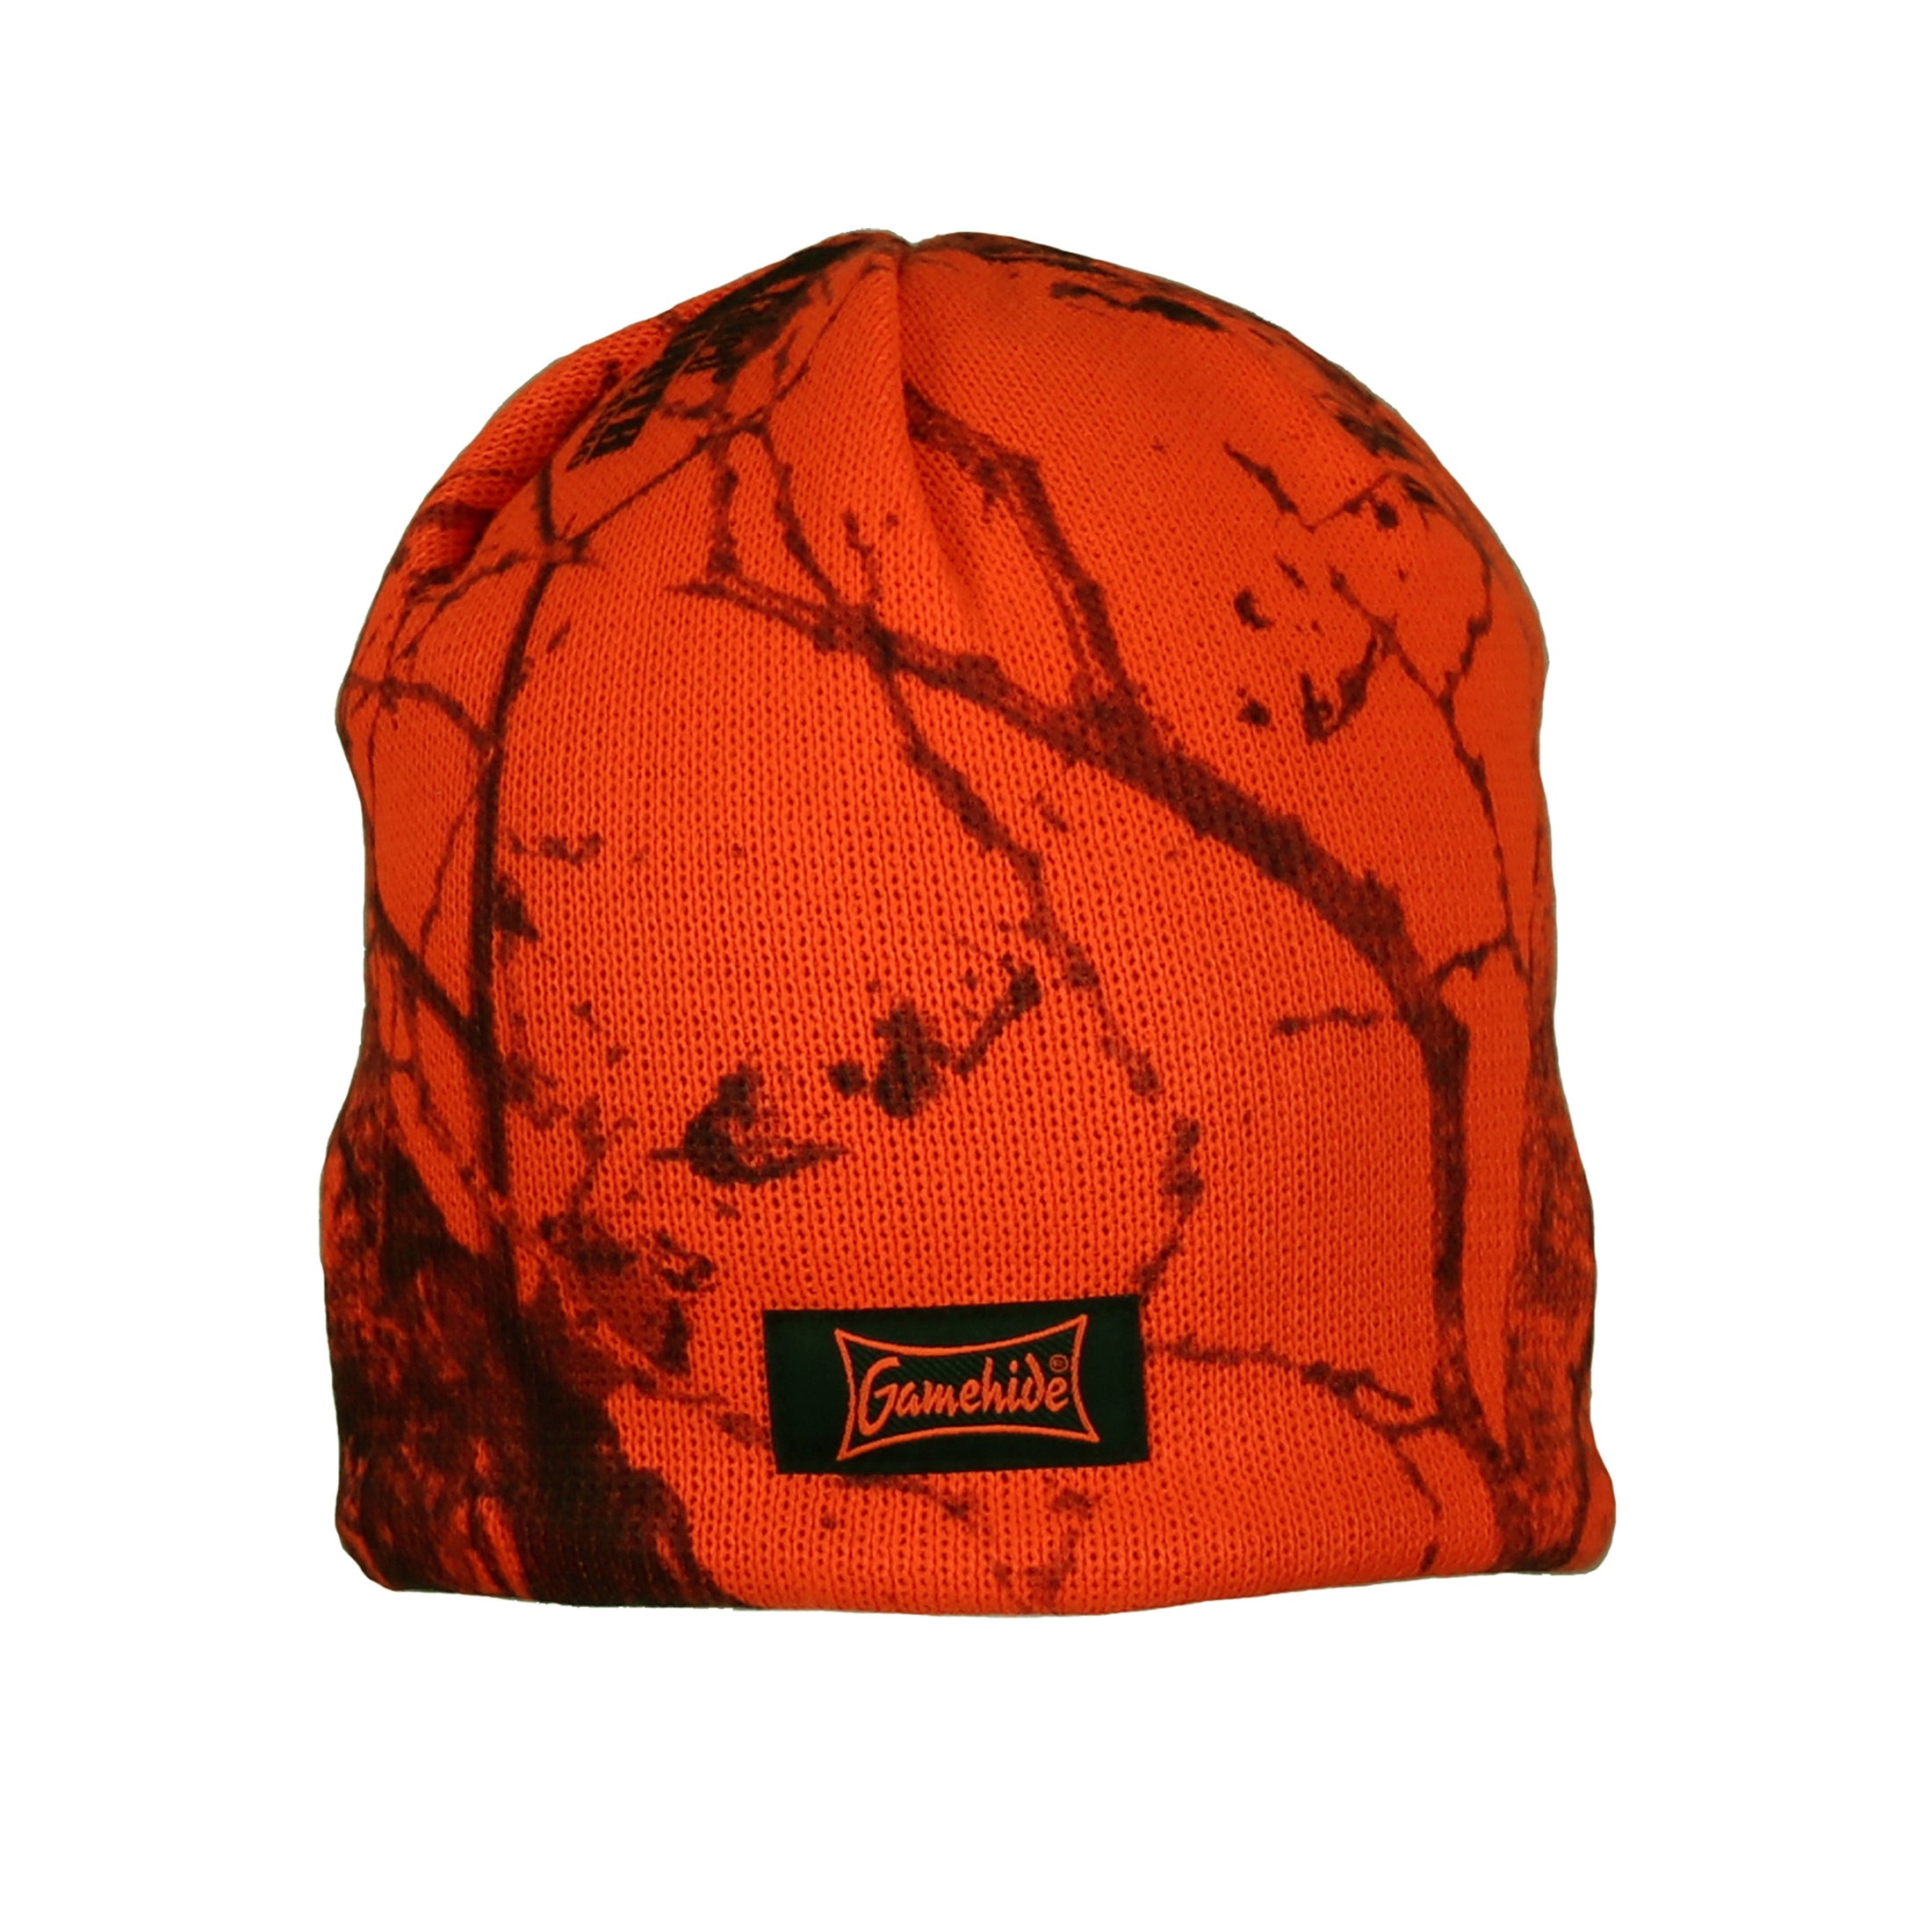 gamehide tundra skull cap (naked north blaze orange)